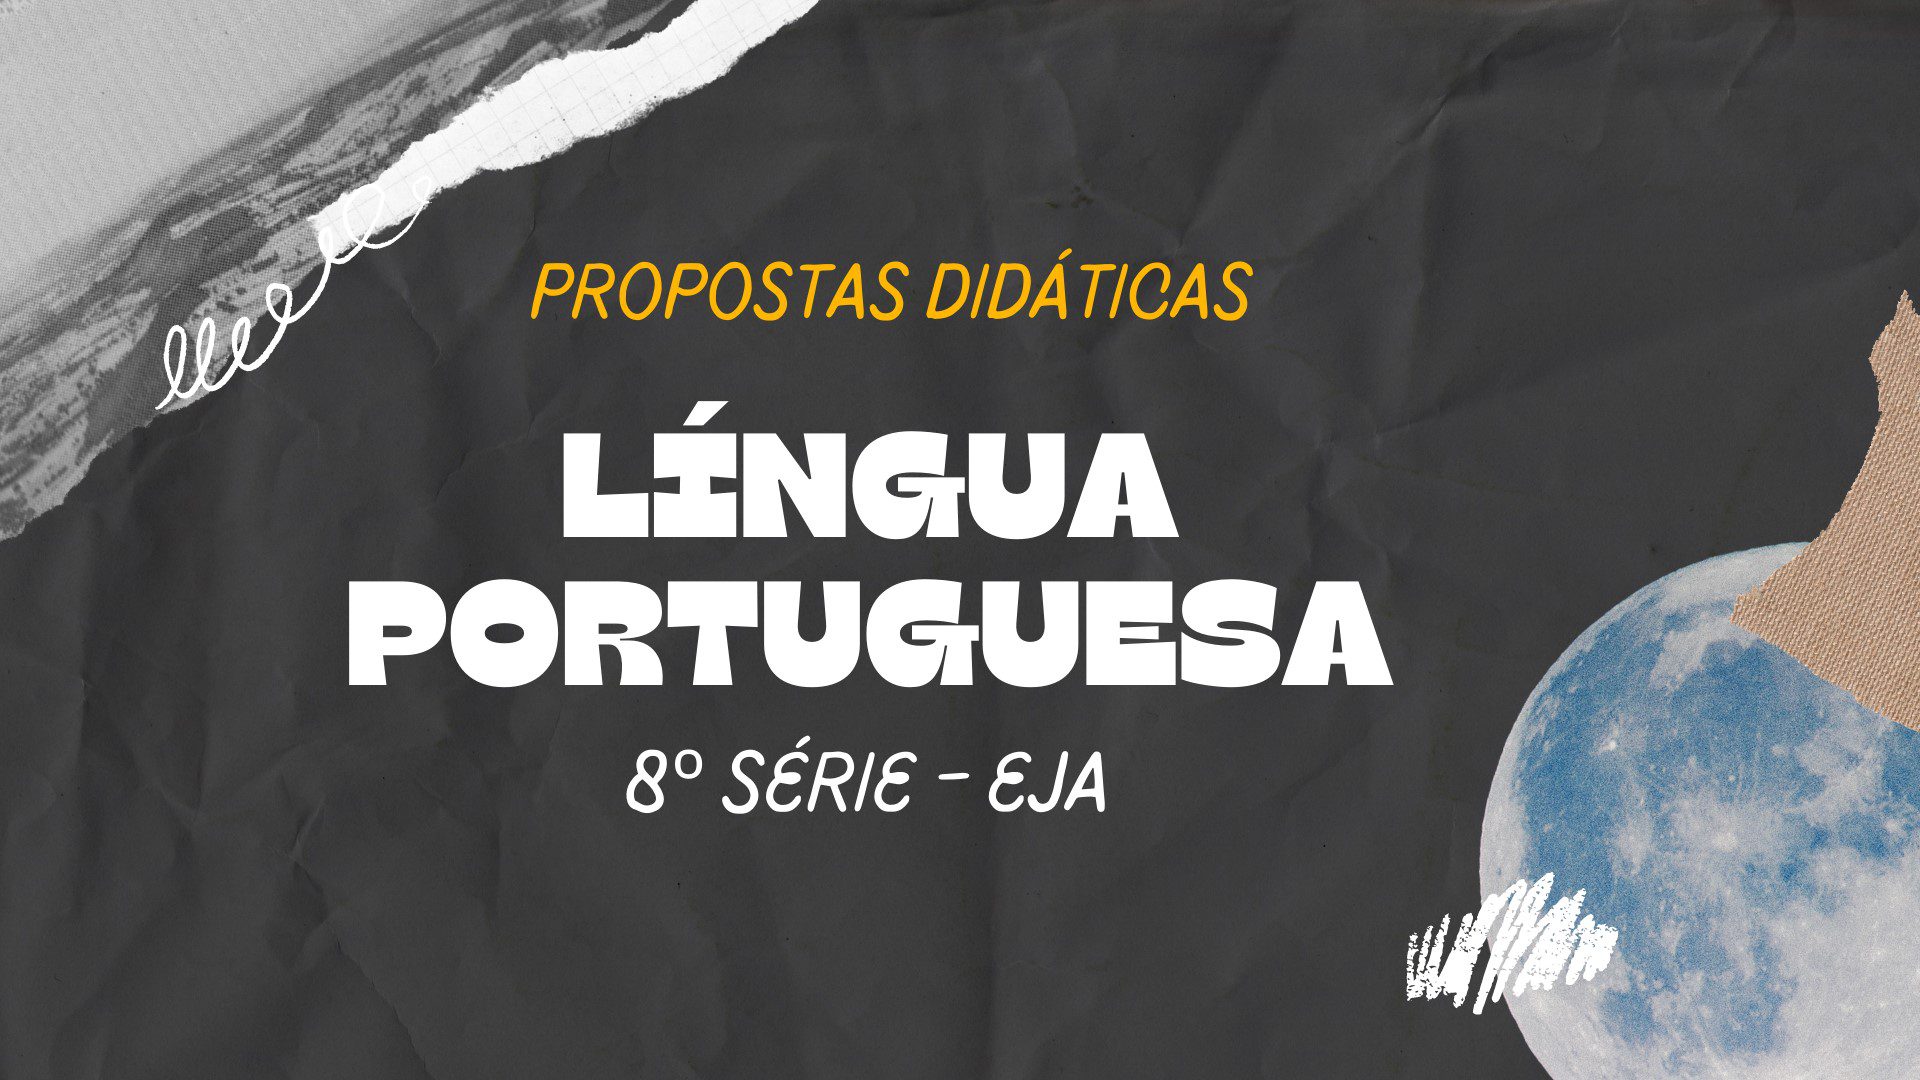 You are currently viewing Propostas didáticas – Língua Portuguesa EJA – 8ª série.